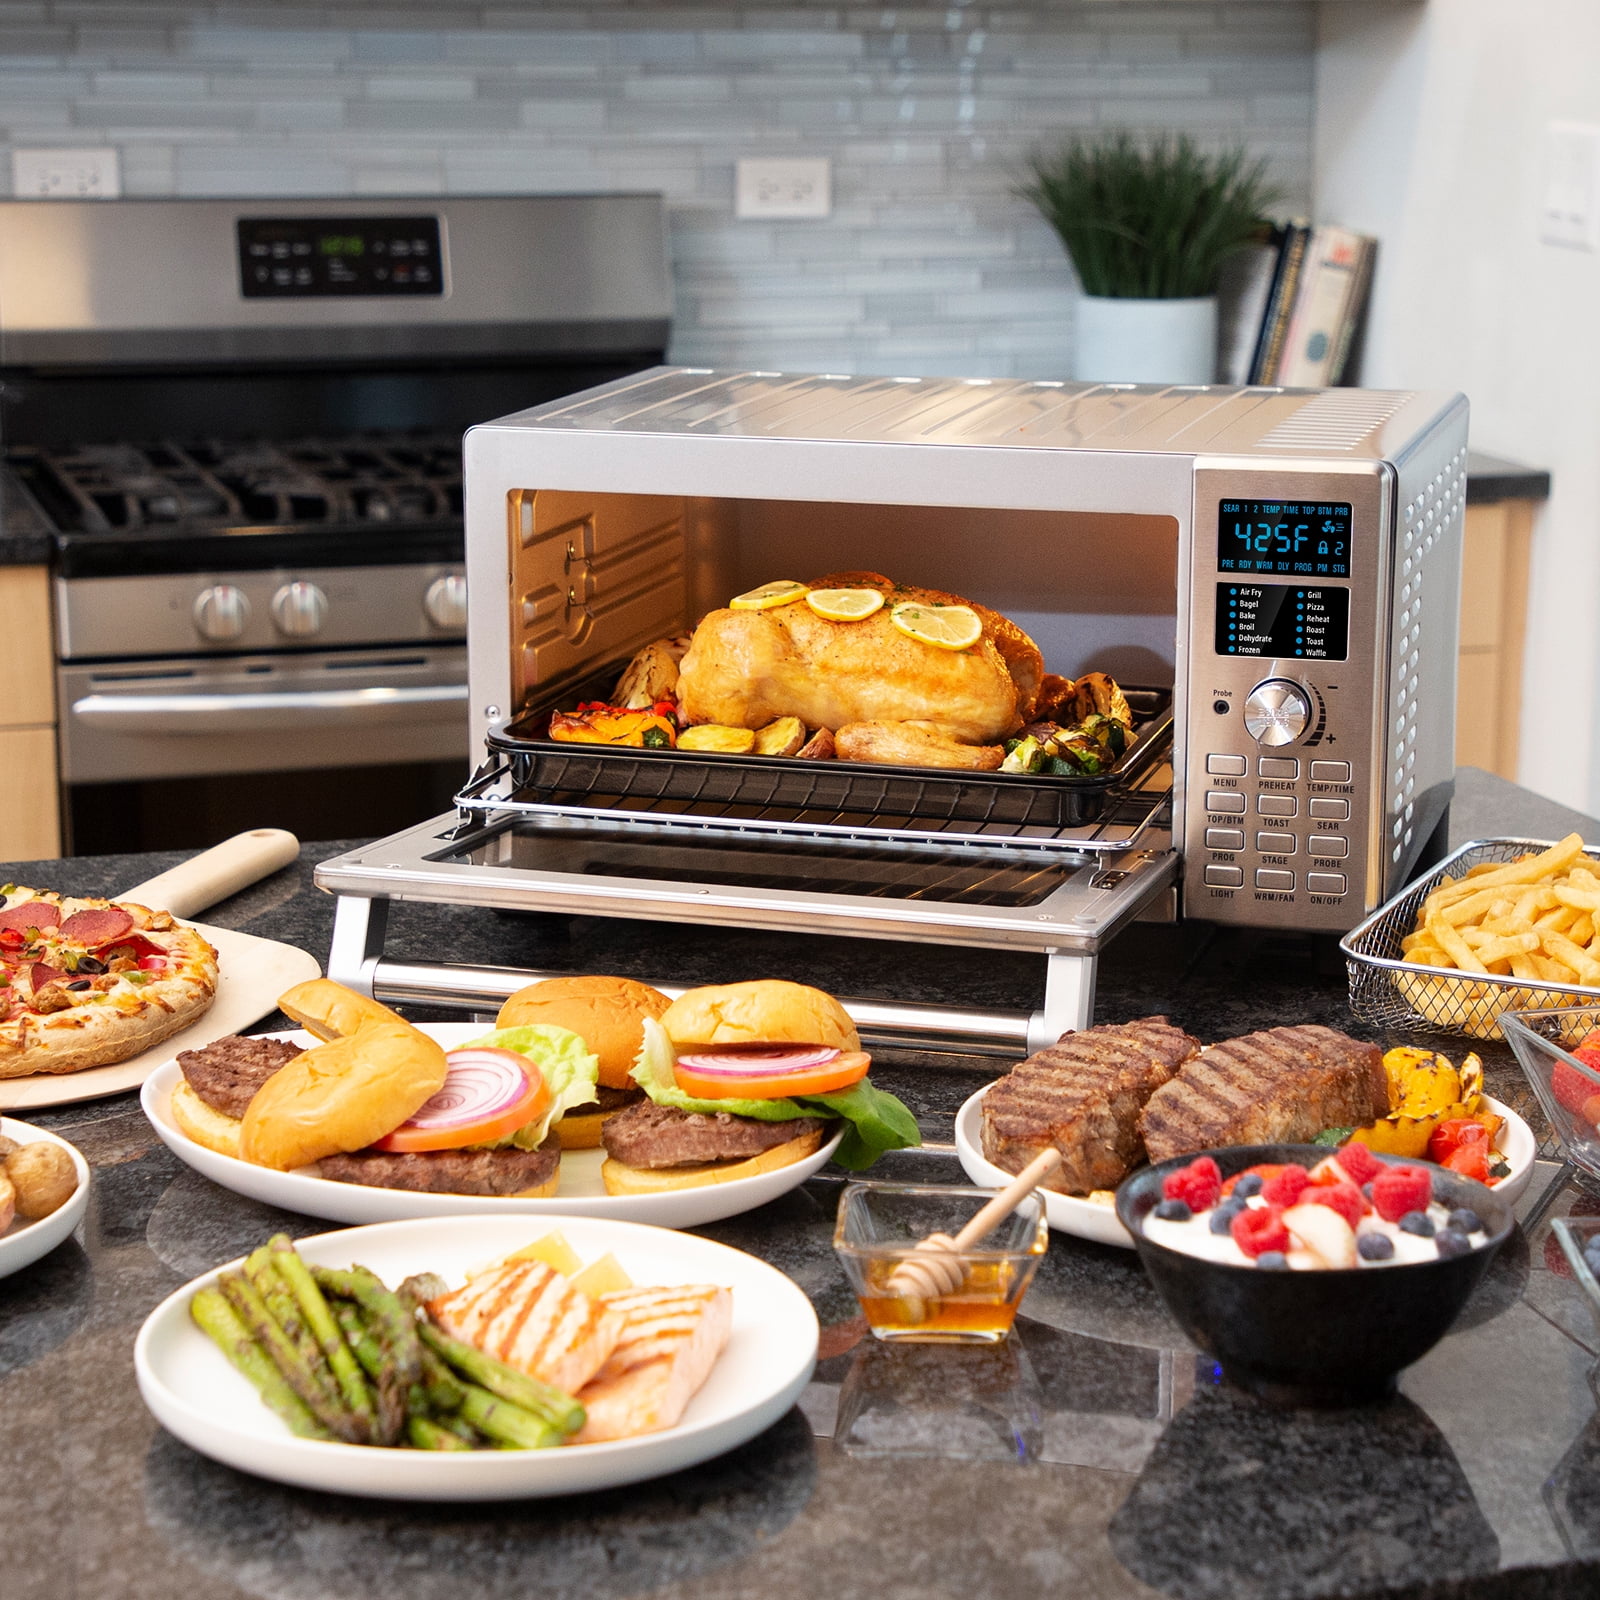  Nuwave Bravo 12-in-1 Digital Toaster Oven, Countertop